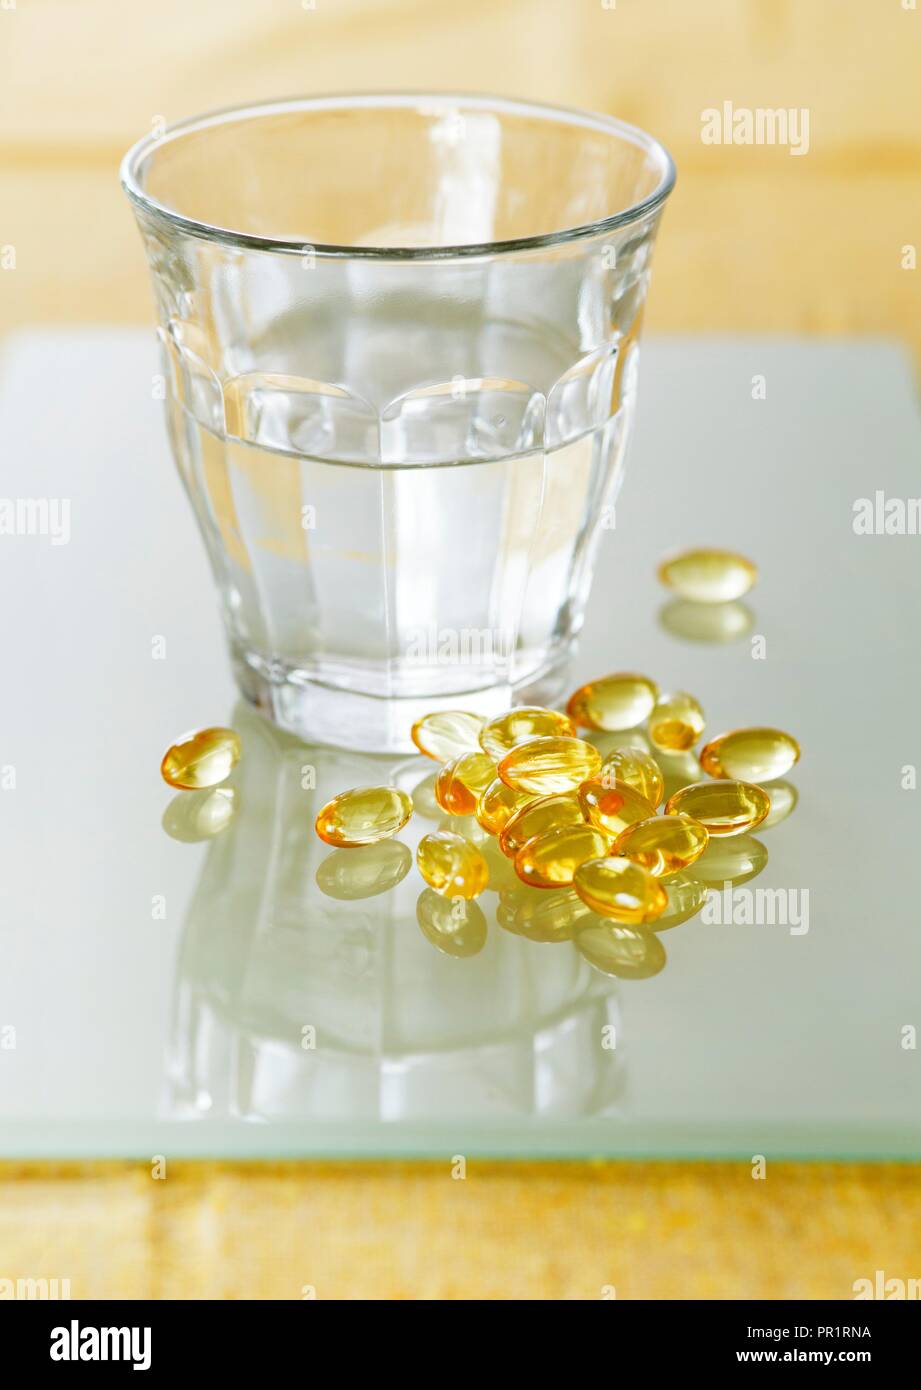 https://c8.alamy.com/comp/PR1RNA/evening-primrose-oil-capsules-in-a-pile-next-to-a-glass-of-water-PR1RNA.jpg